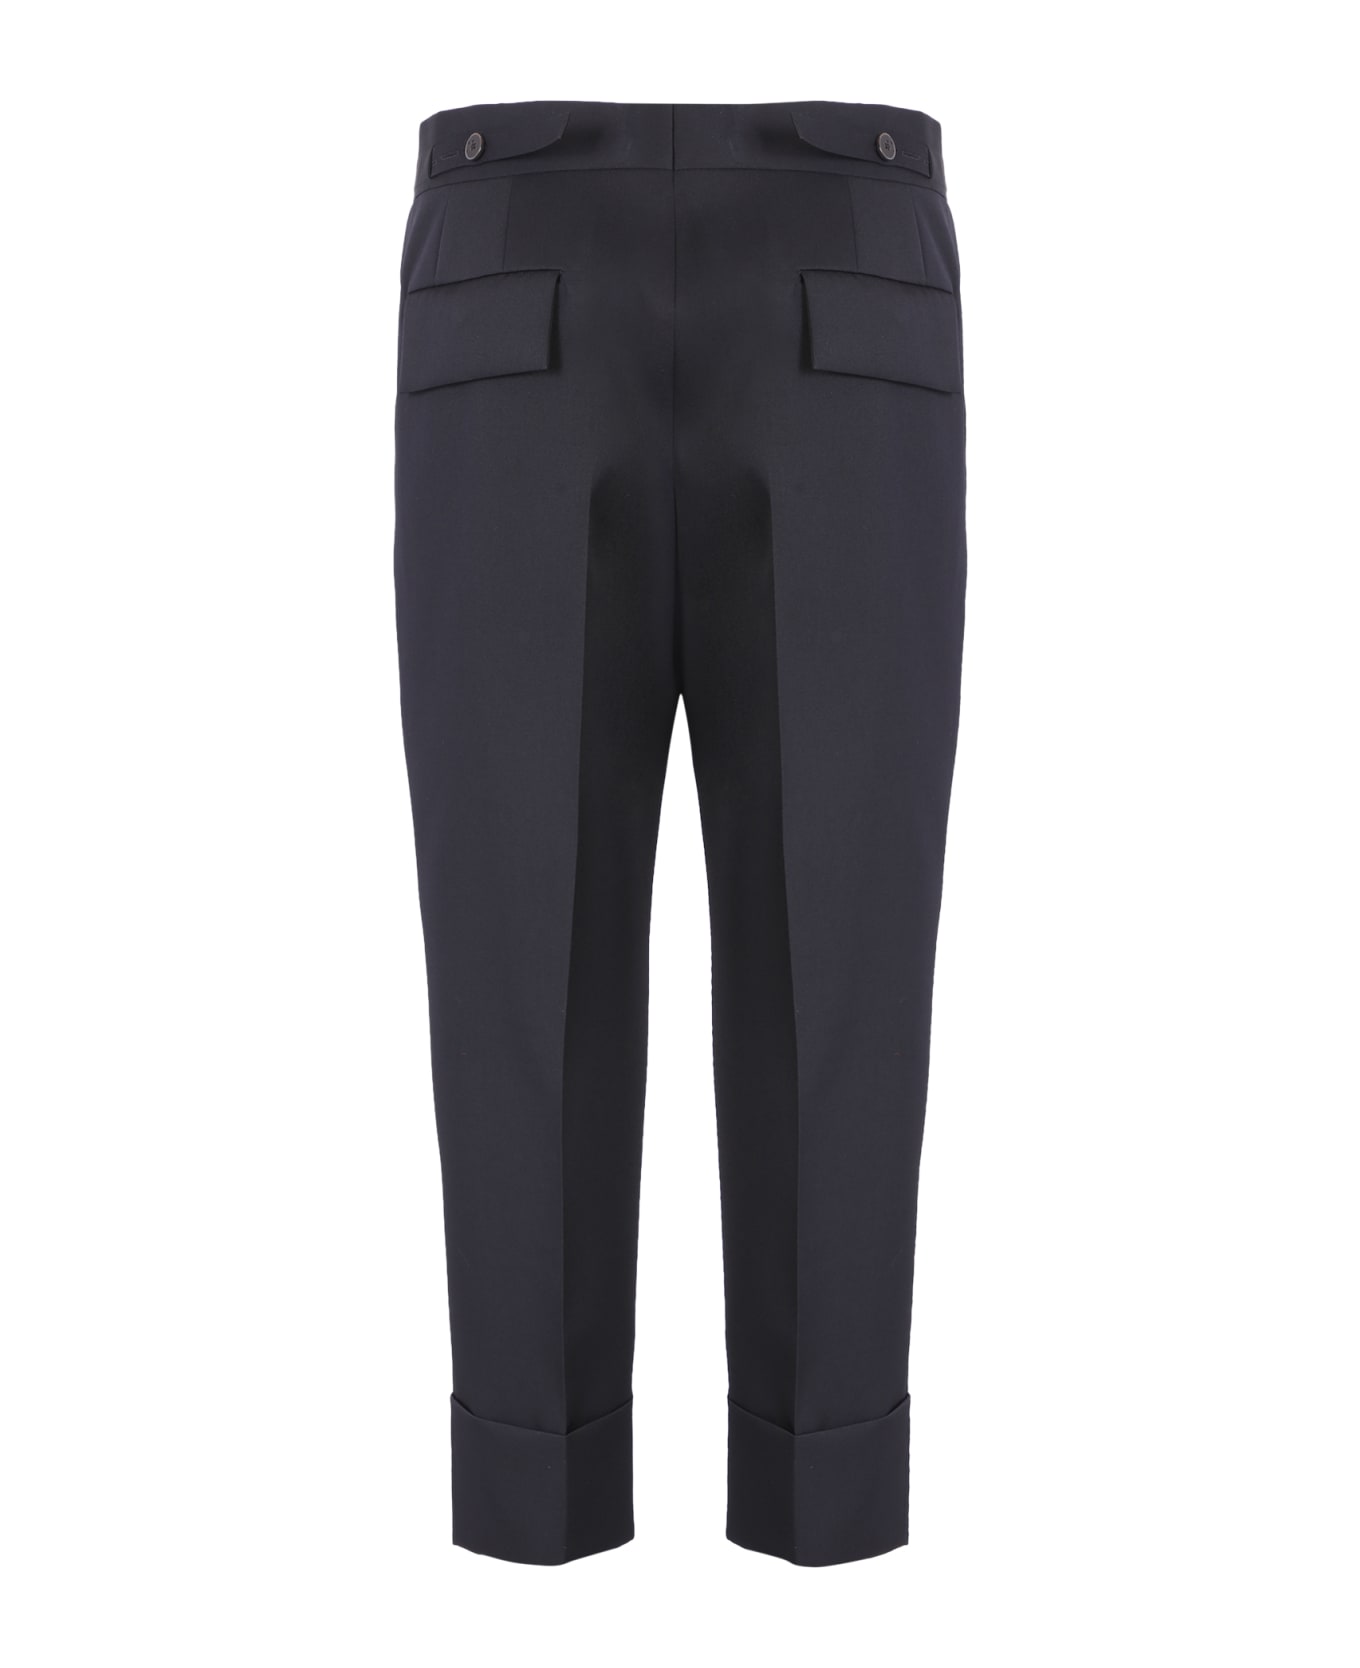 Sapio Pleat Cropped Trousers - Black